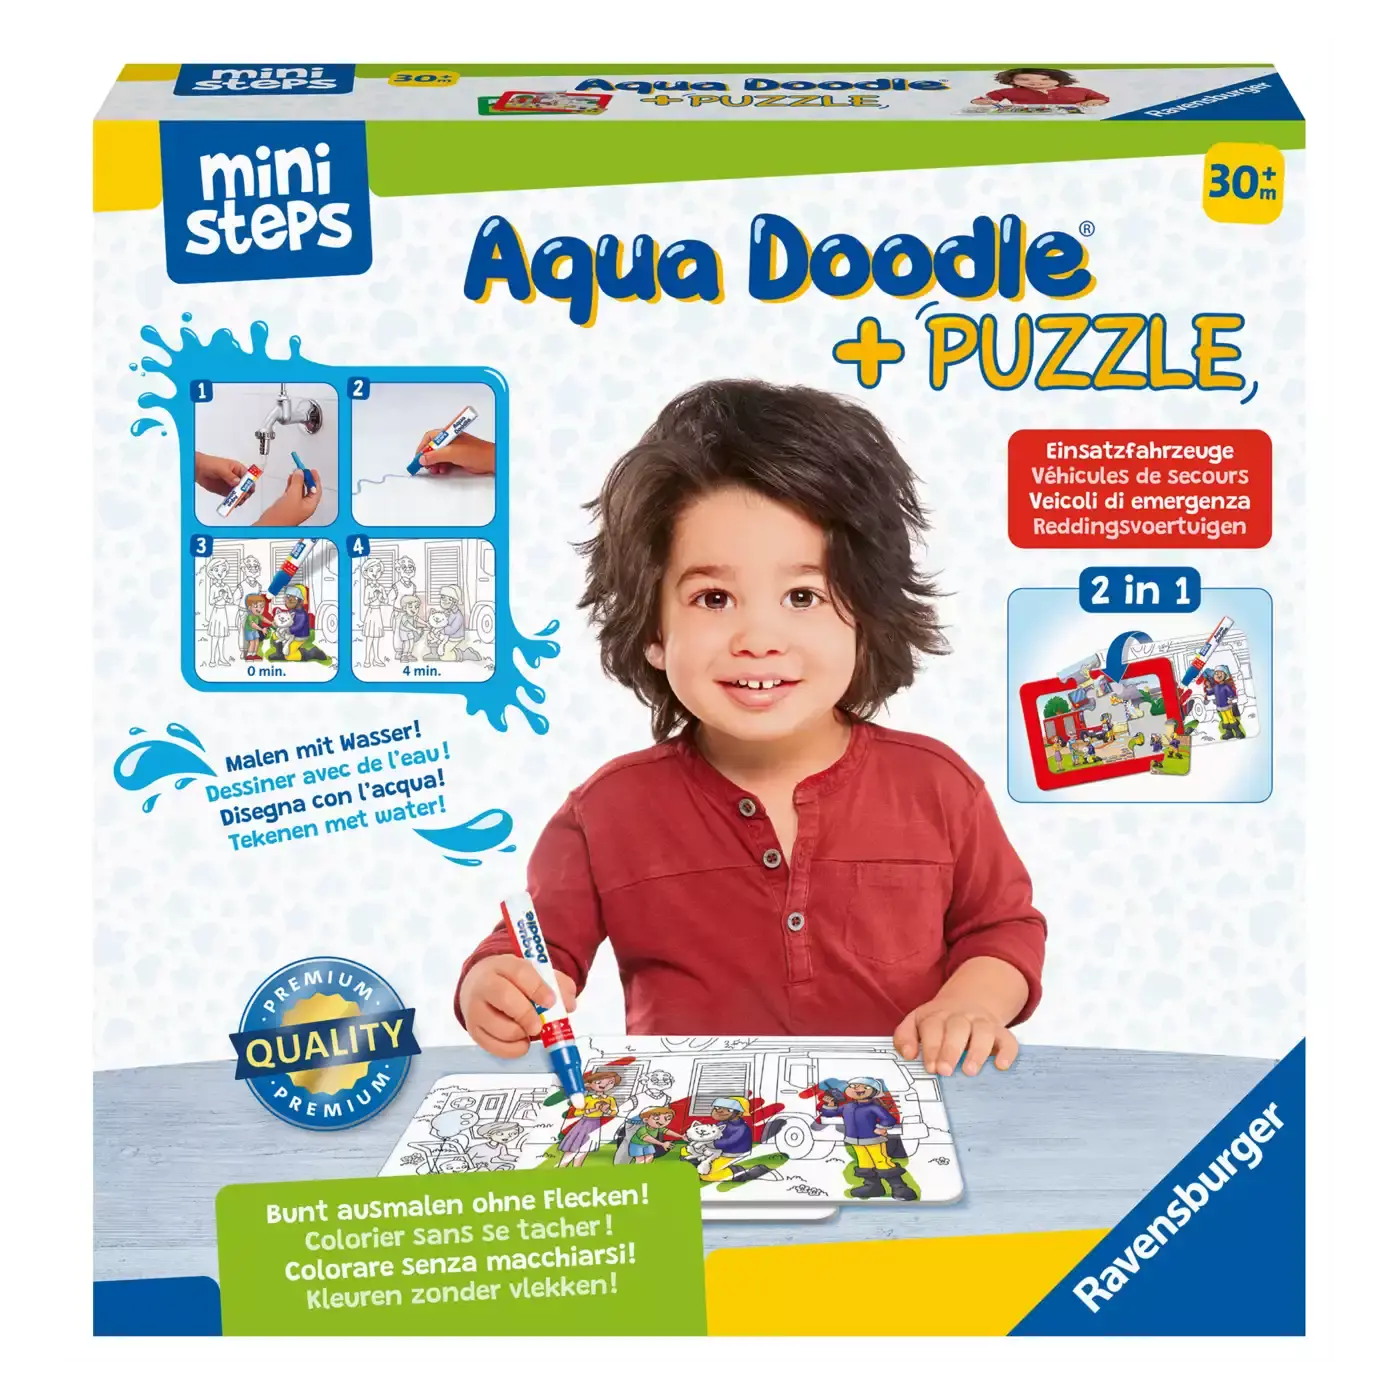 Mini Steps Aqua Doodle Puzzle Einsatzfahrzeuge Ravensburger 2000579738708 1